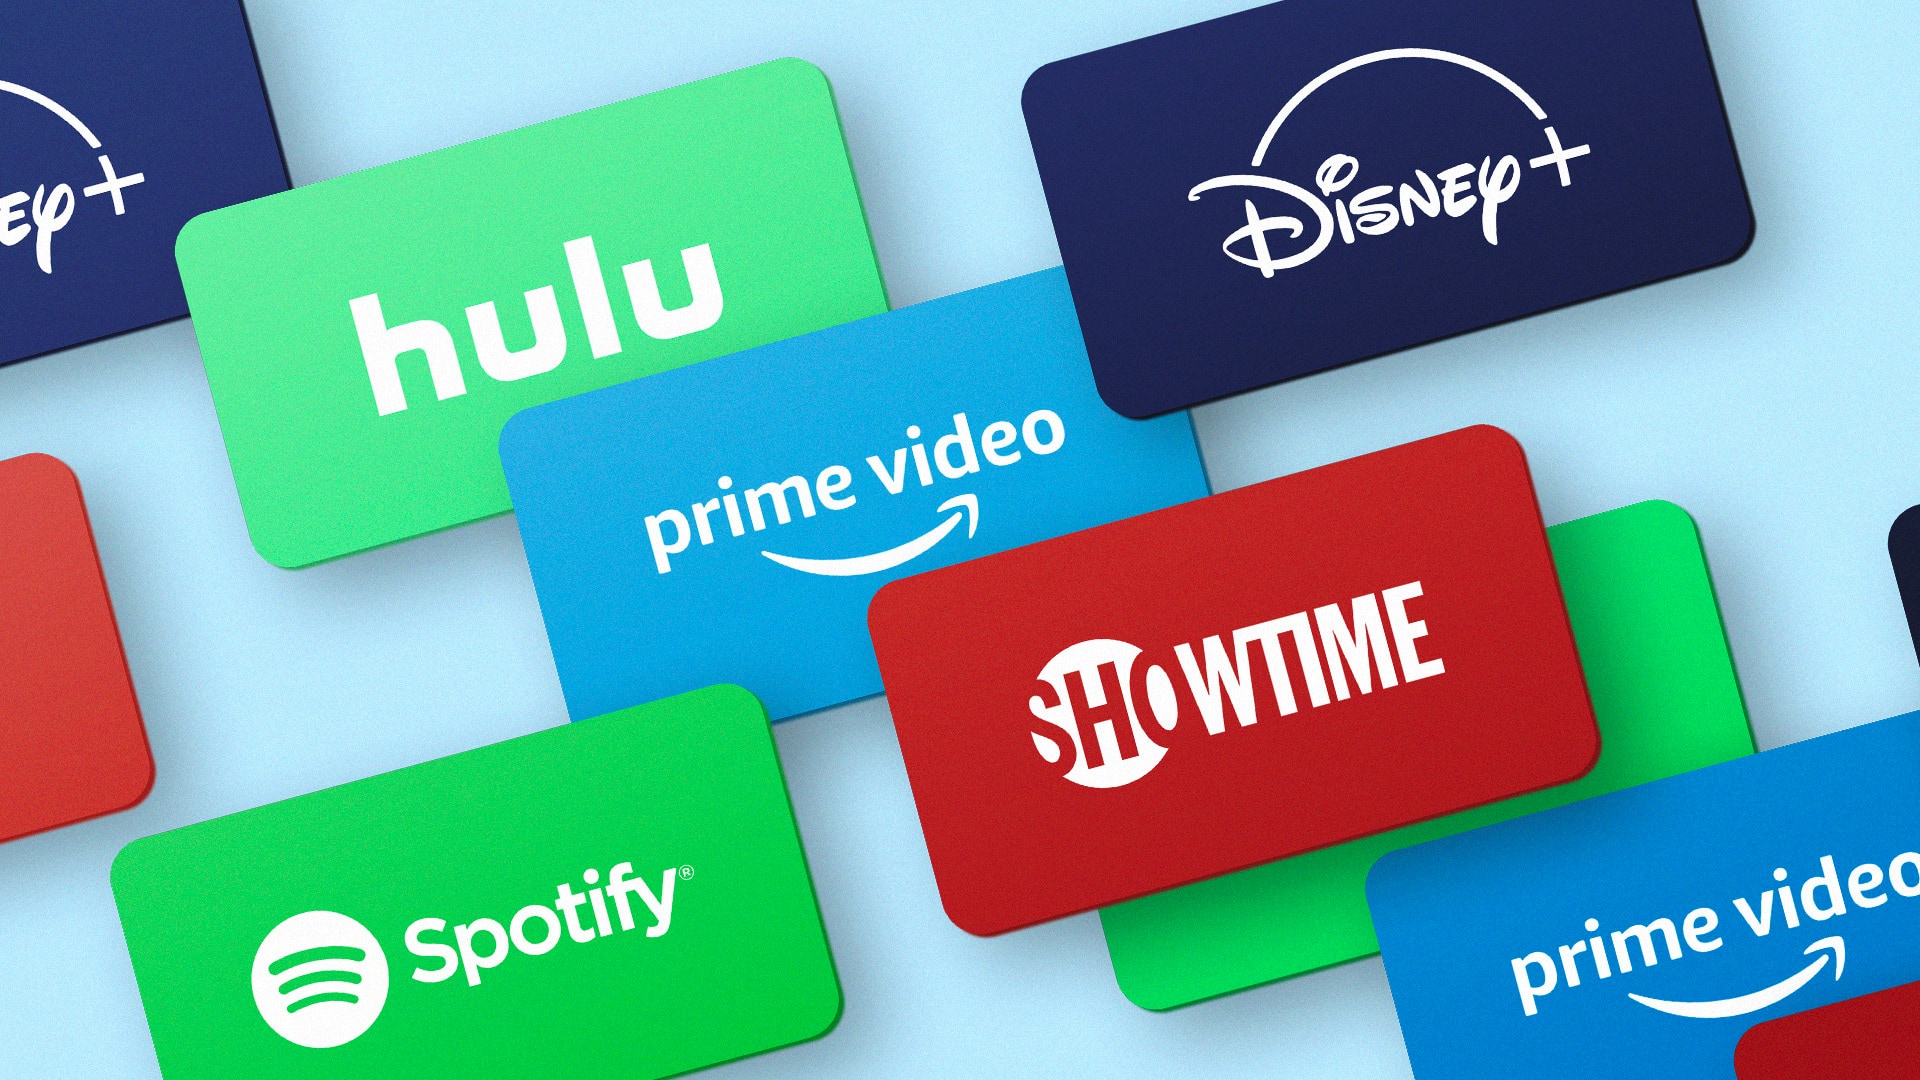 Hulu Spotify Showtime Disney Plus Prime Video Logos su uno sfondo blu